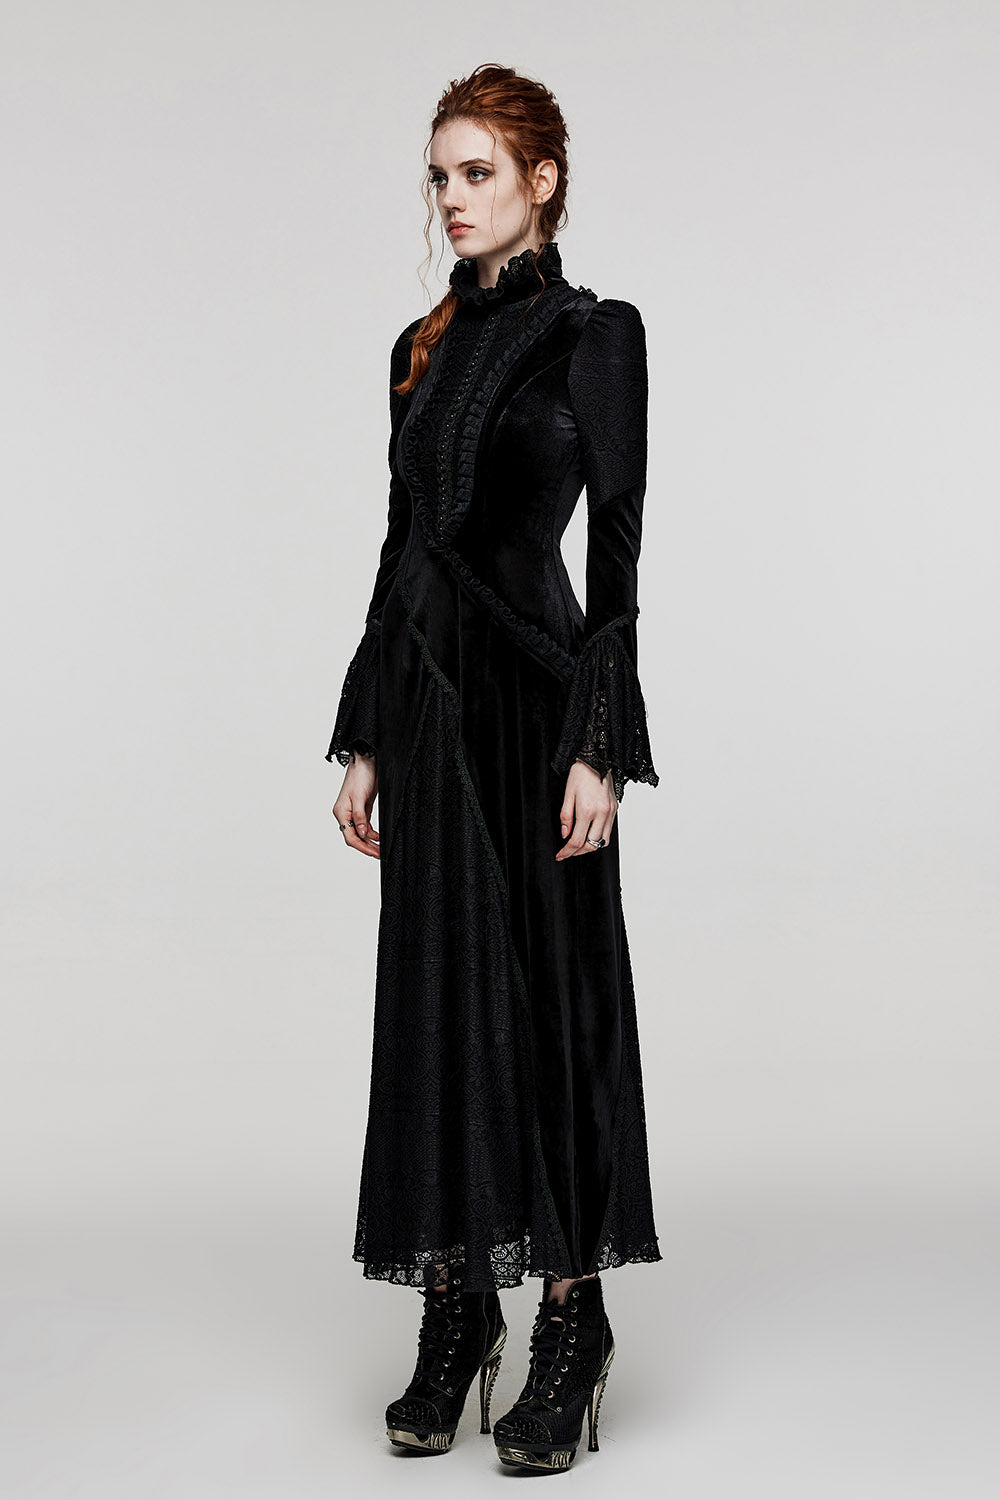 lace gothic dress